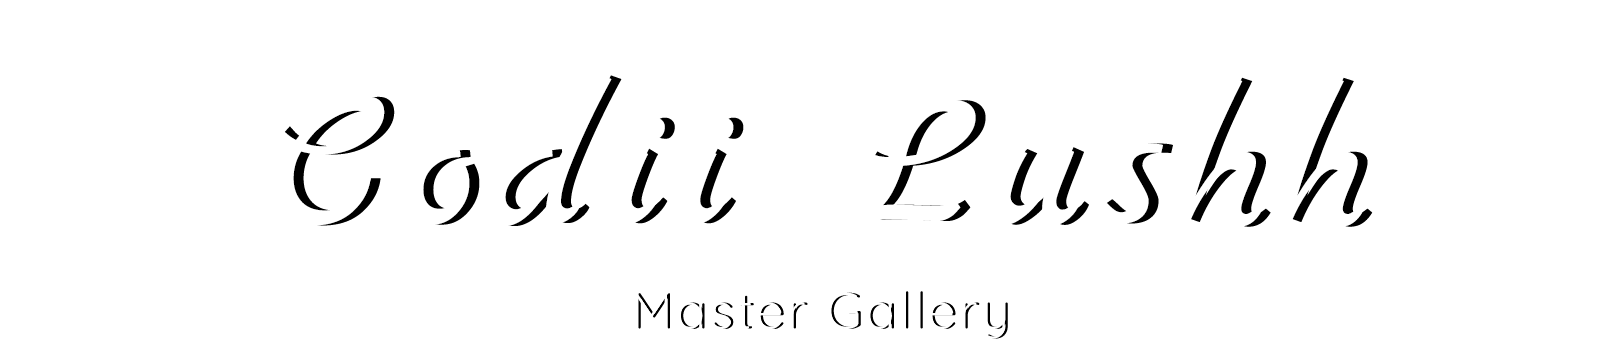 Codii Lushh Master Gallery